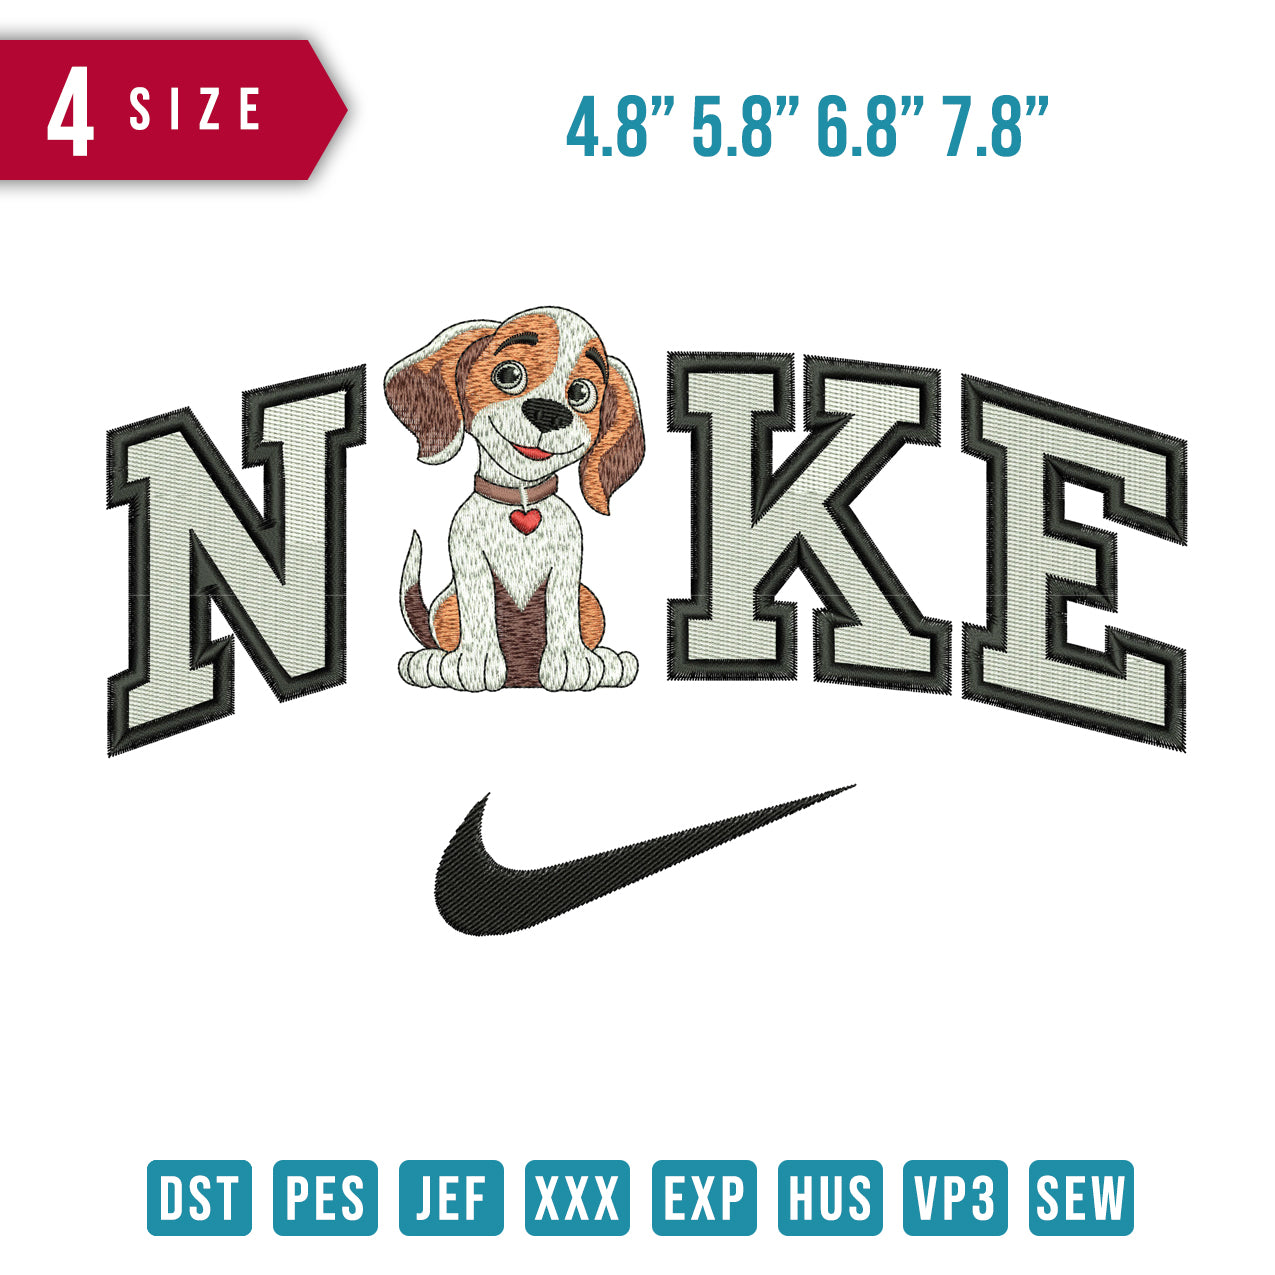 Nike Dog Puppy